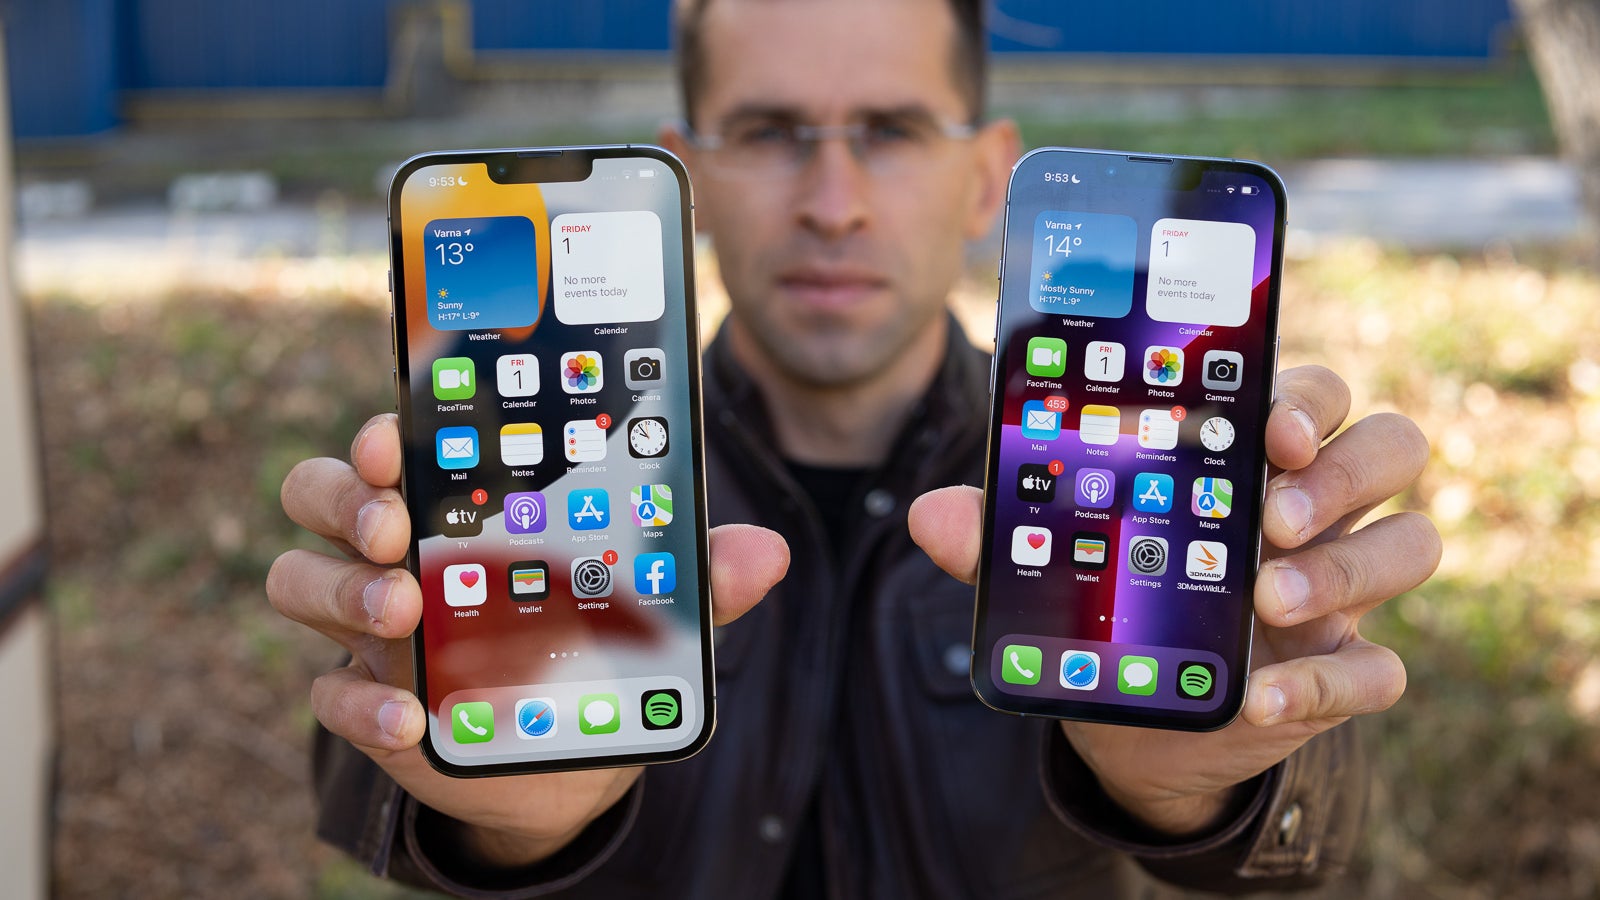 Apple iPhone 13 Pro Max vs iPhone 13 Pro